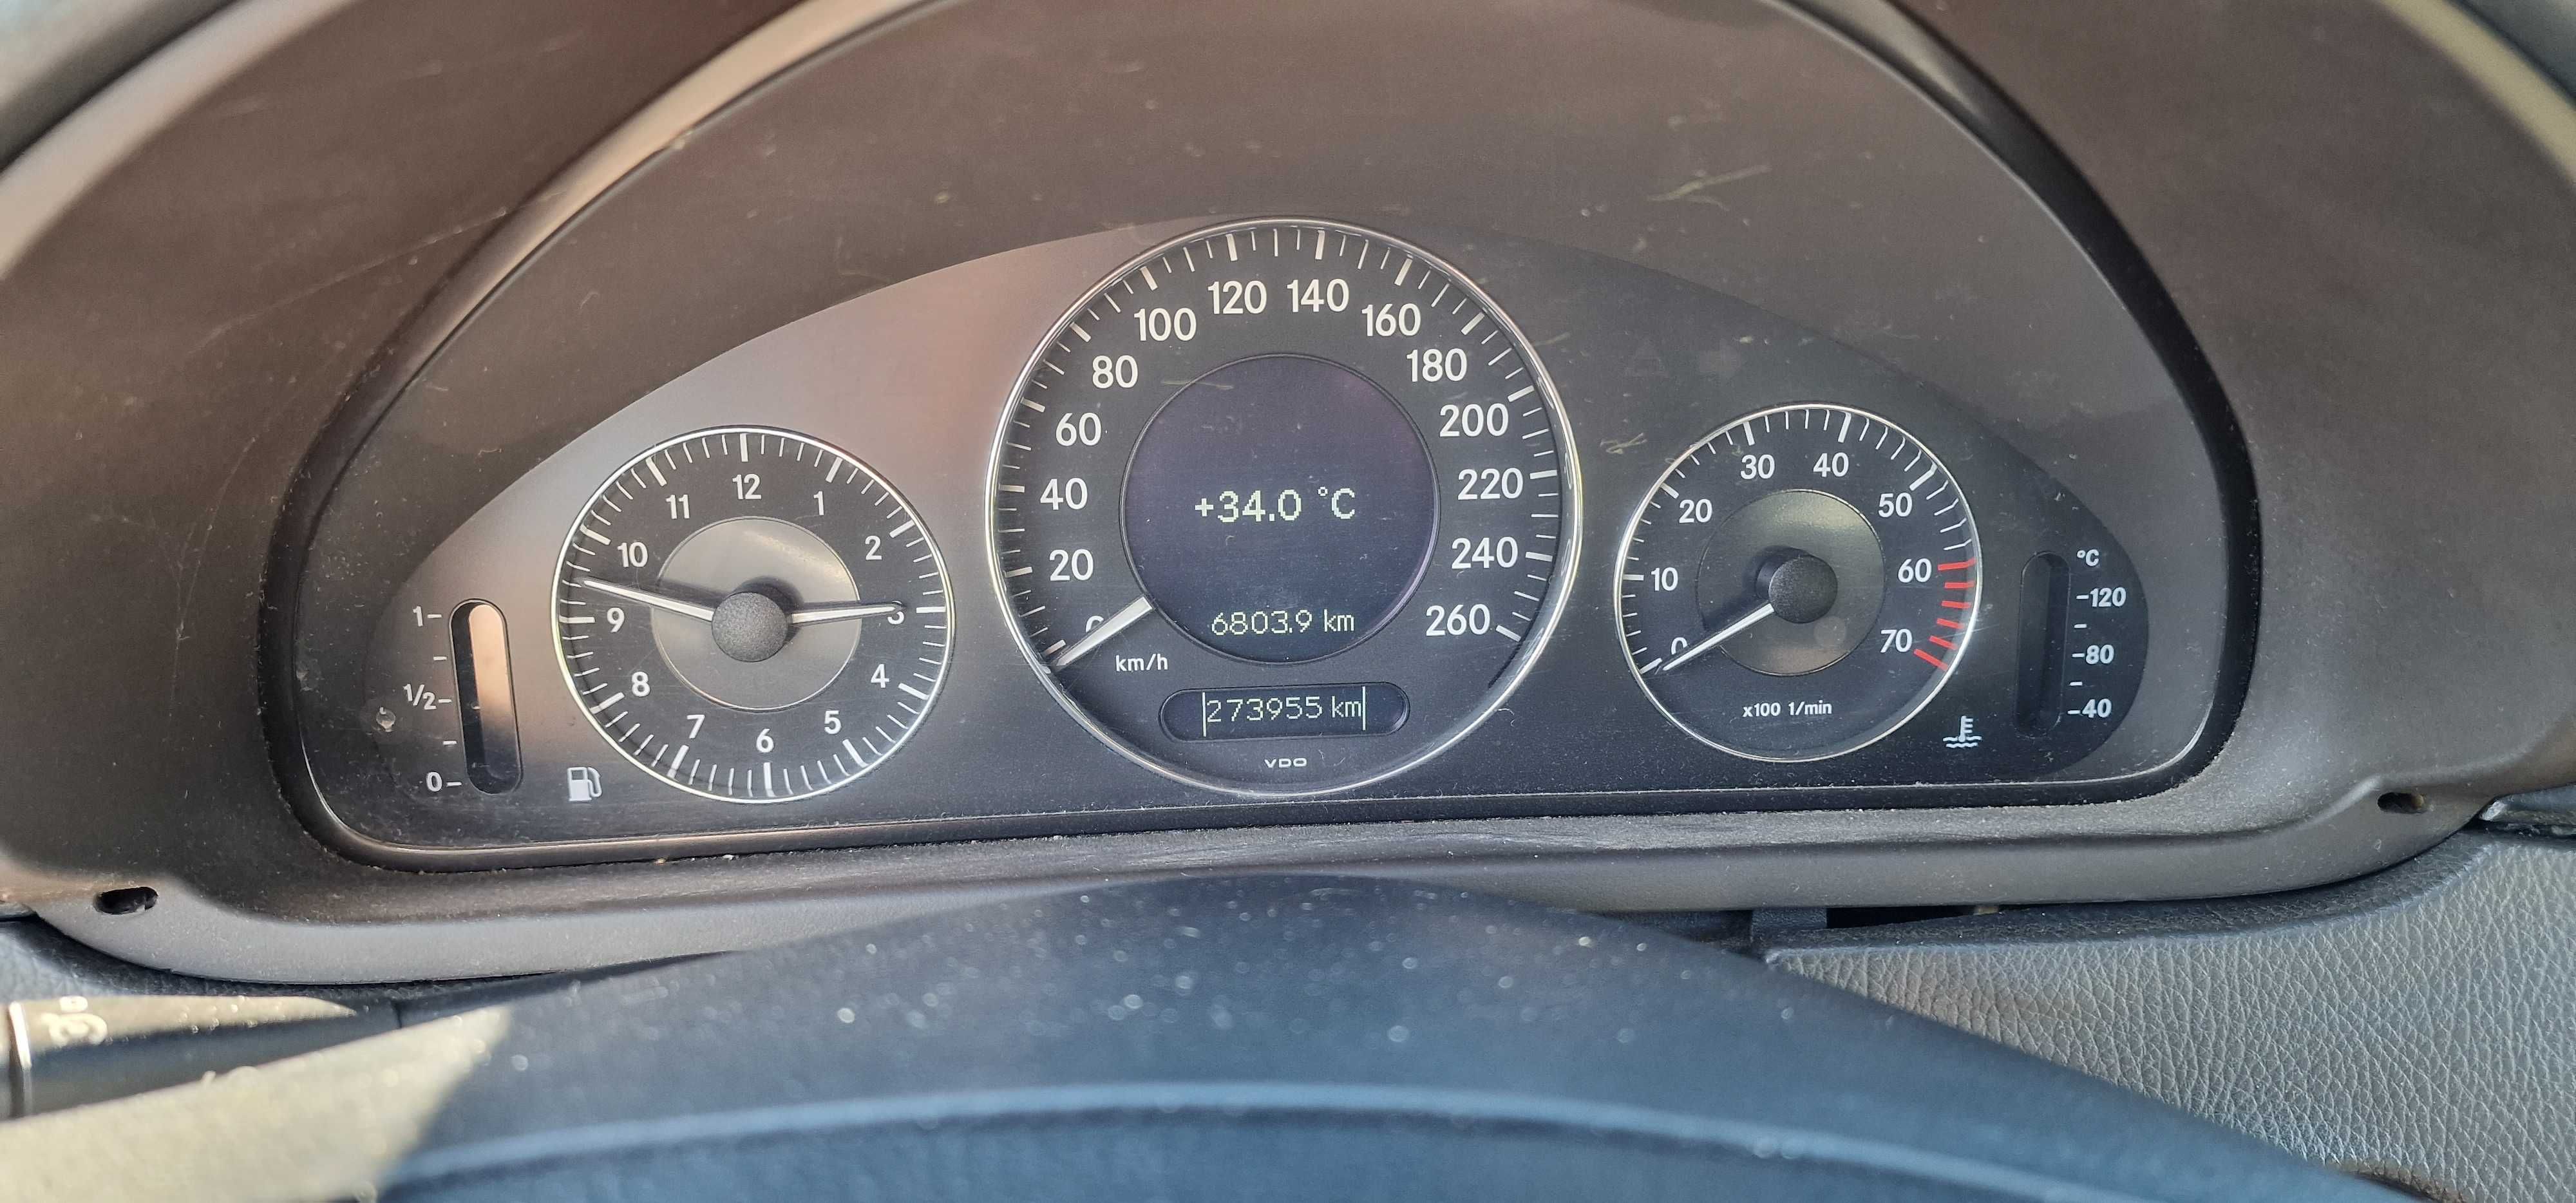 Мерседес Mercedes W209 CLK 200 Газ/бенз 2499$